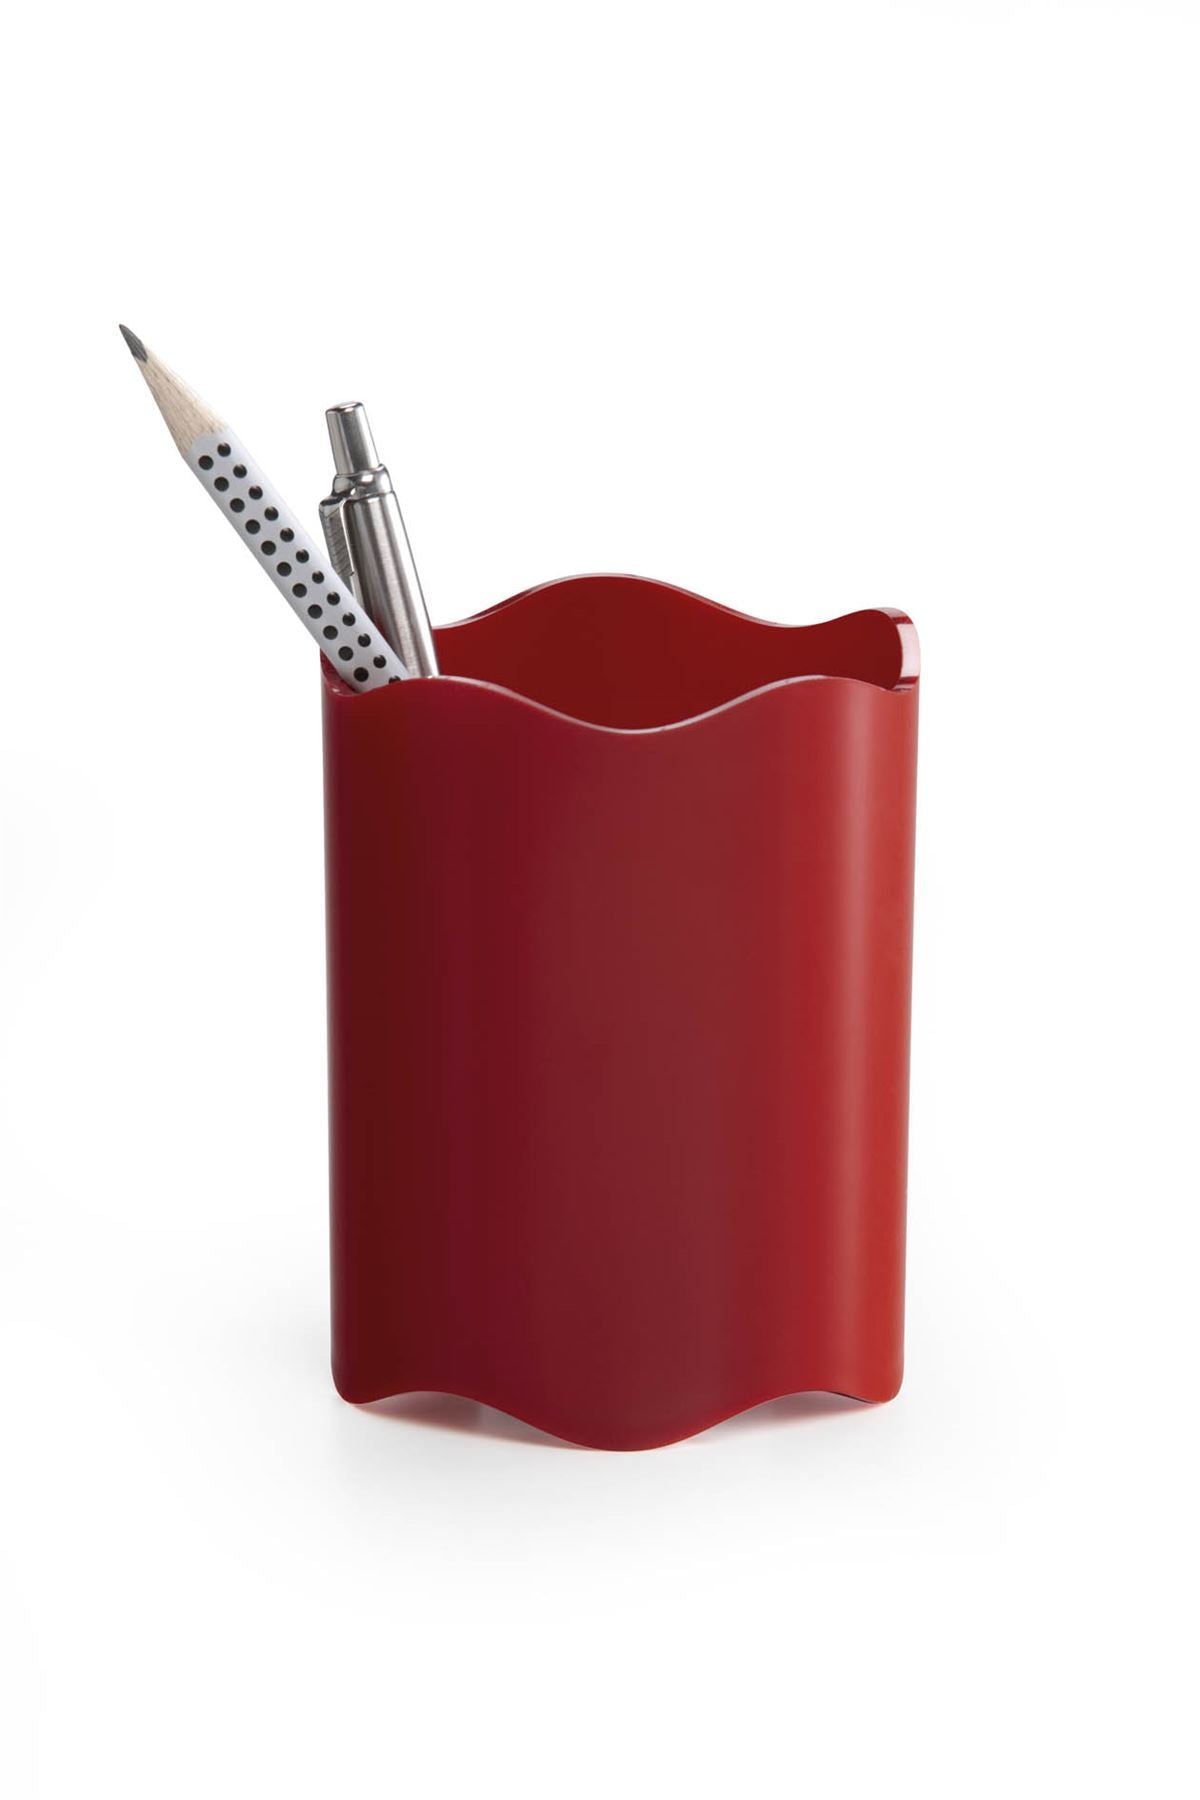 Durable TREND Pen Pot Pencil Holder Desk Tidy Organizer Cup | Red